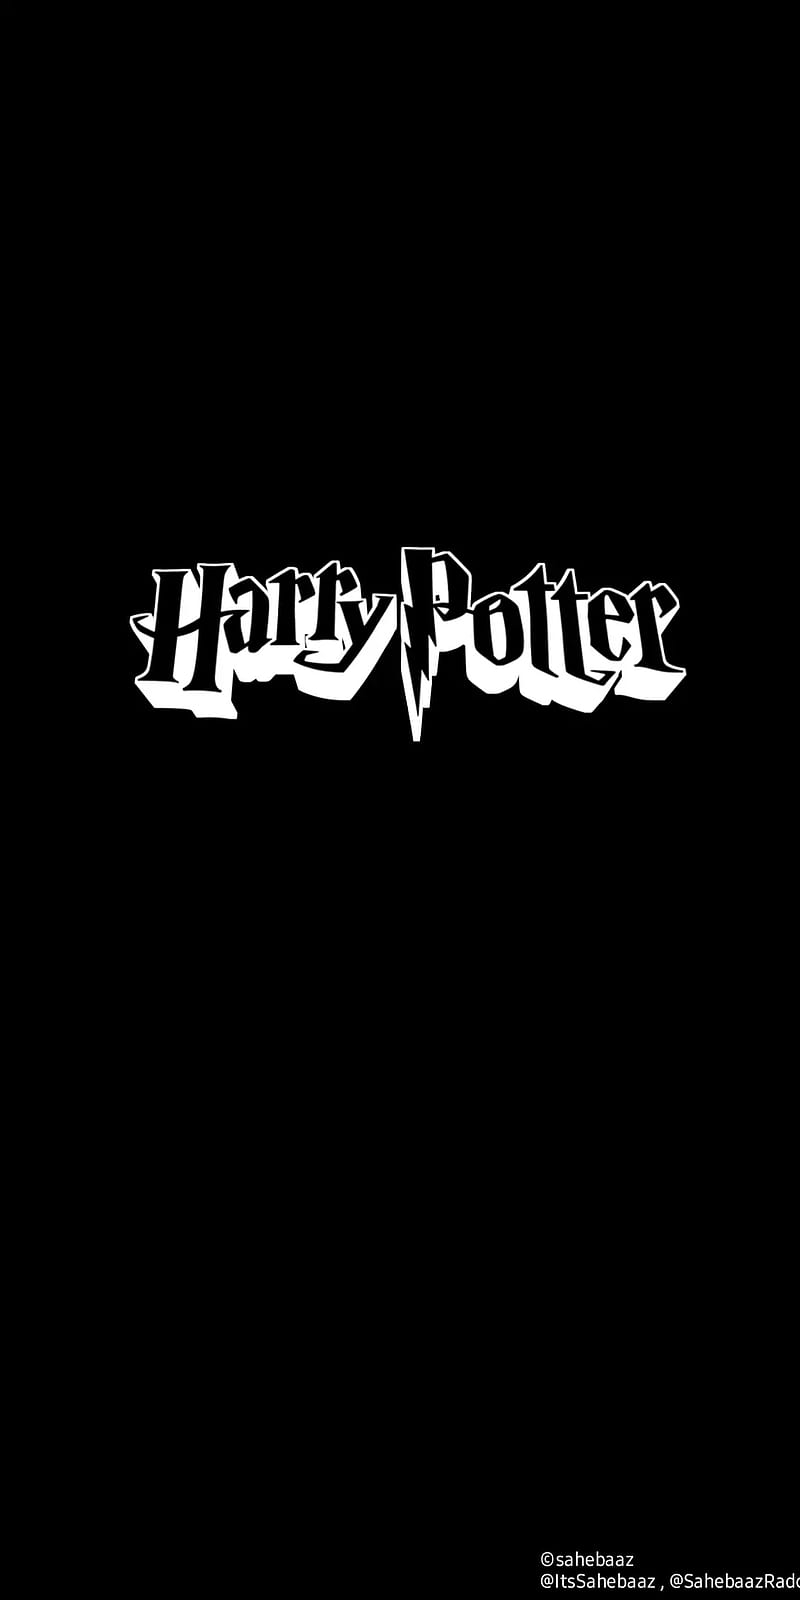 Harry Potter Wallpaper 77 images